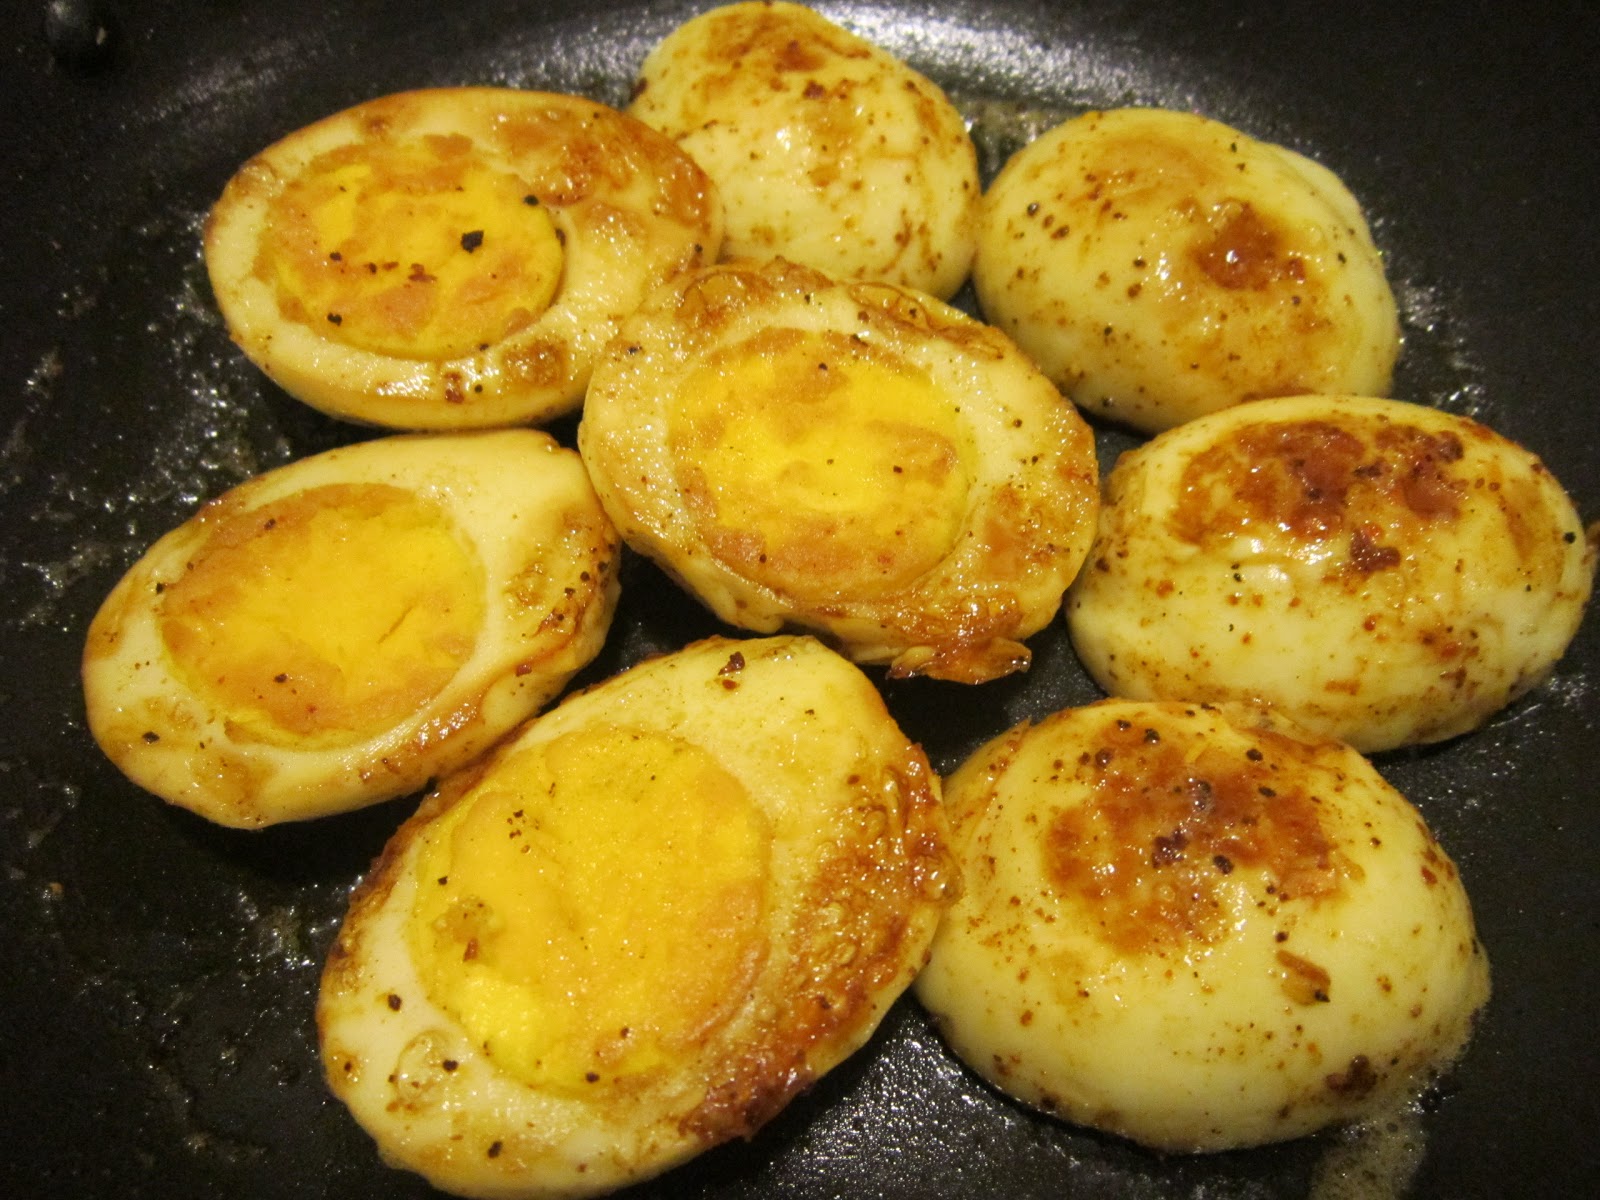 My Grandma's Recipes: Egg Fry